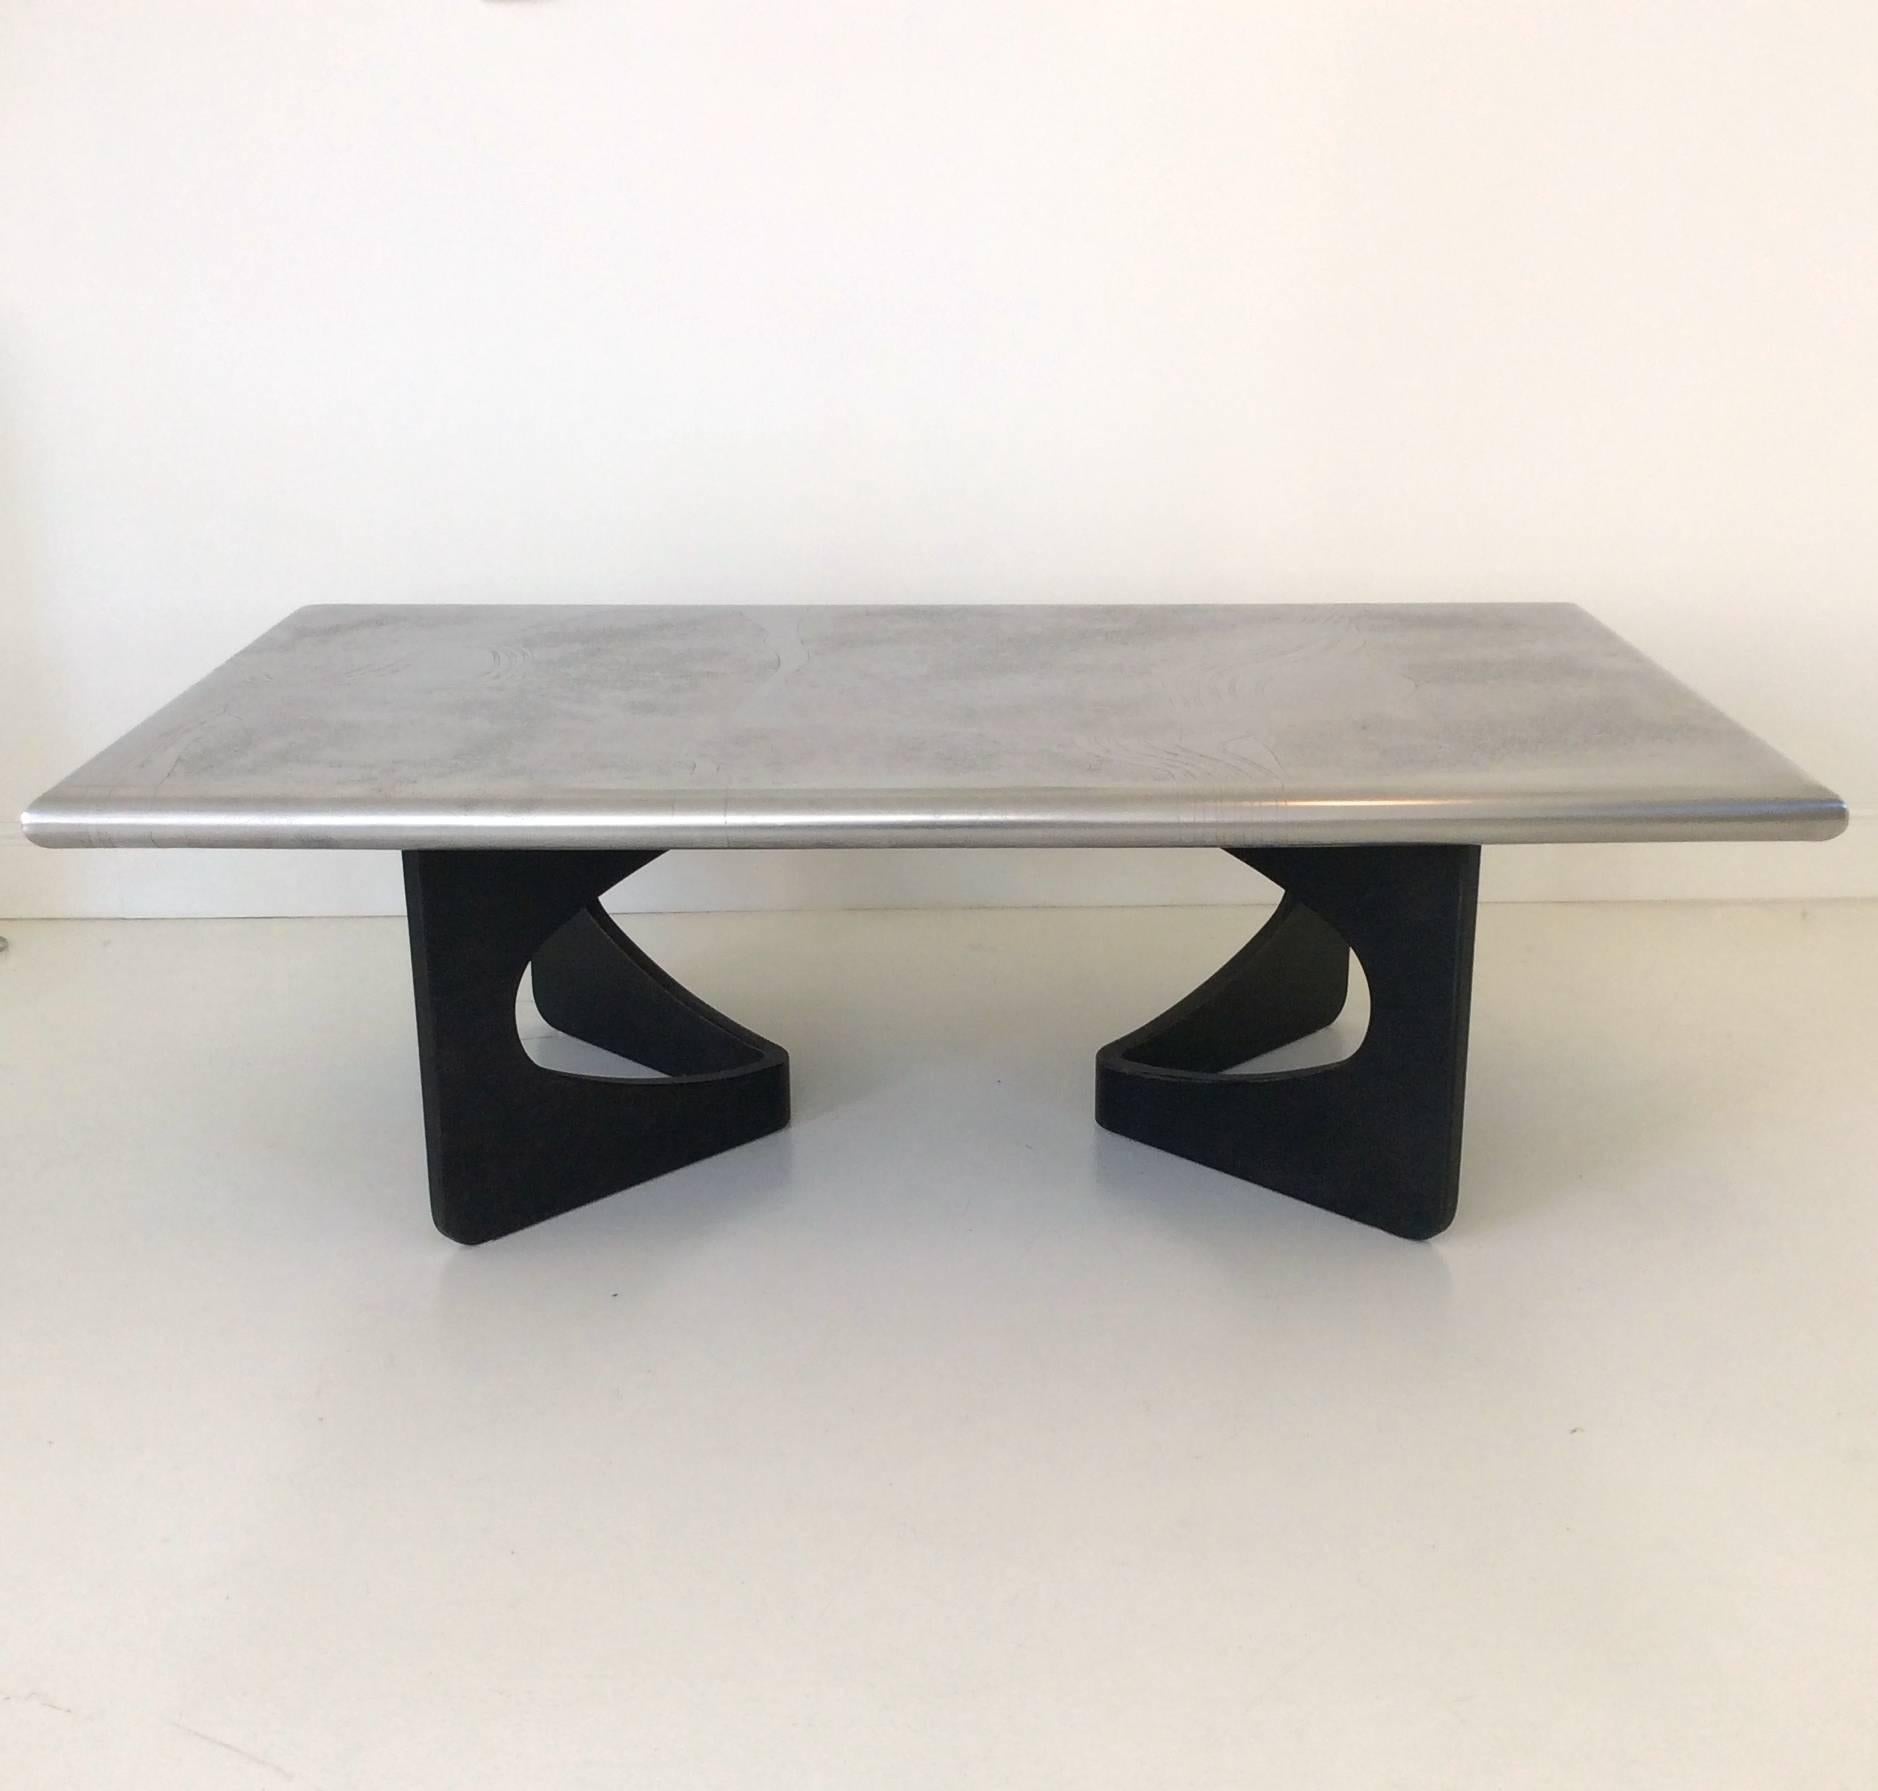 Abstract motif acid etched aluminium coffee table, circa 1970, Germany.
Designed by Hans Kelbeck.
Measures: W 140 cm, D 80 cm, H 45 cm.
Good original condition.
 